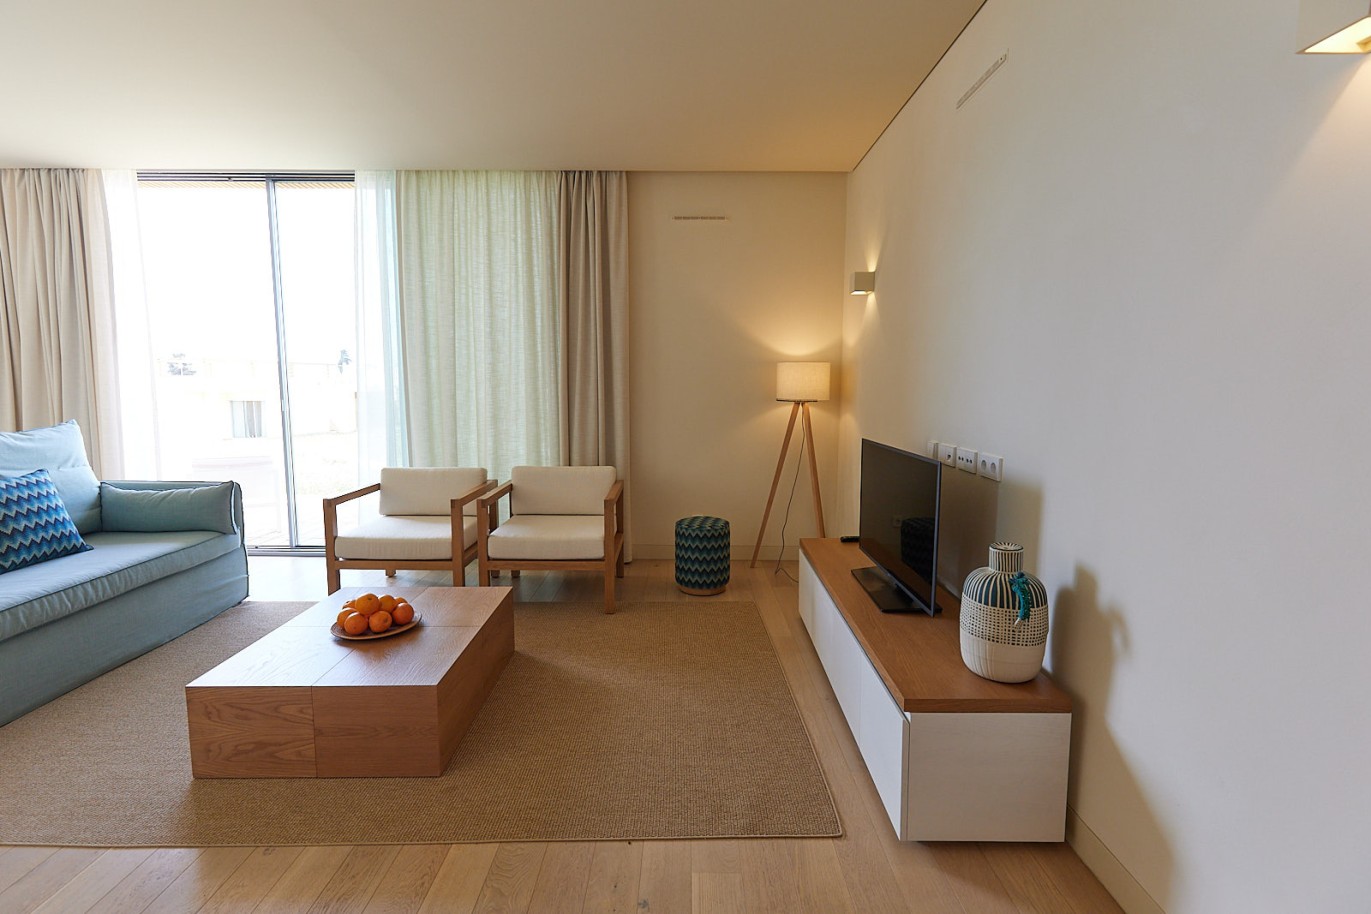 2 bedroom apartment in resort, for sale in Porches, Algarve_230643